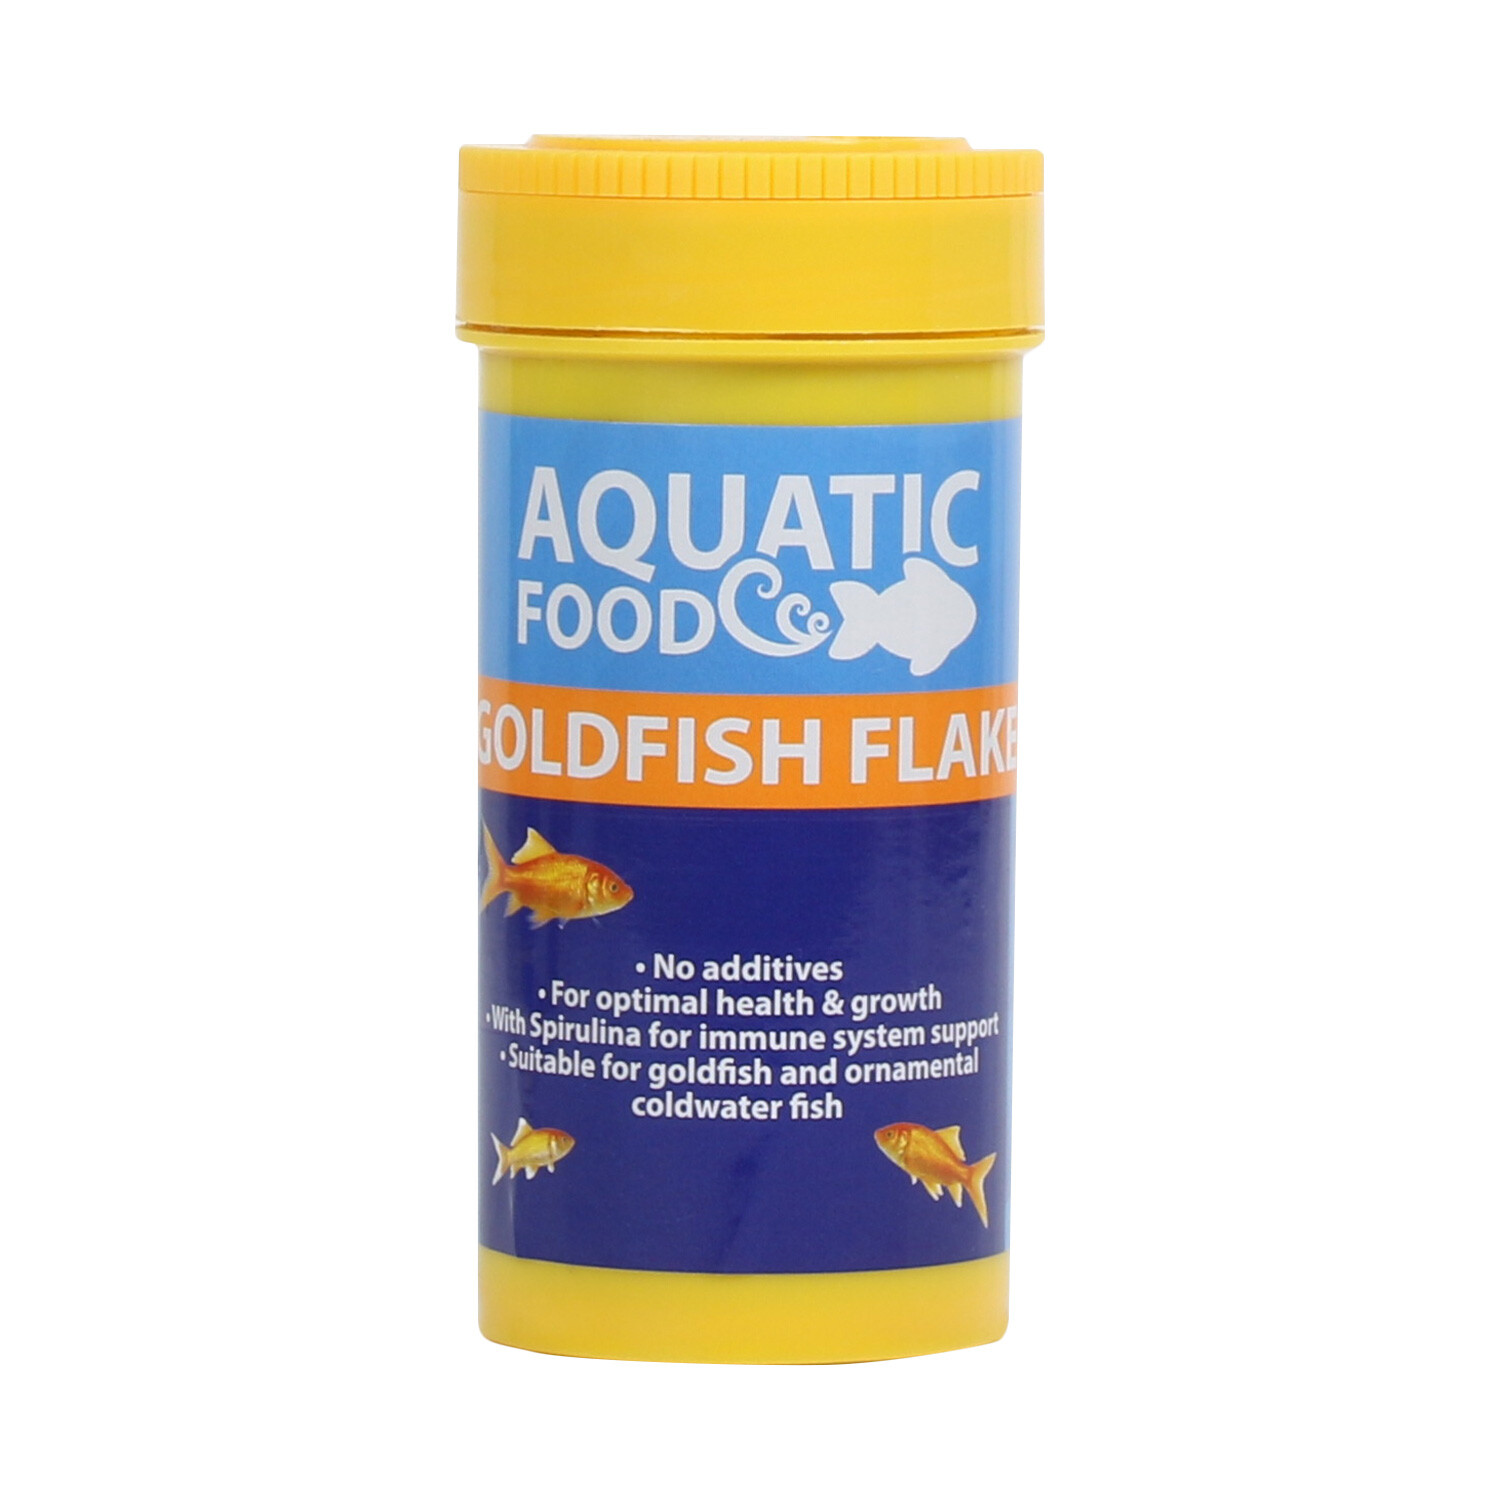 Aquatic Food Goldfish Flakes - 52g Image 2